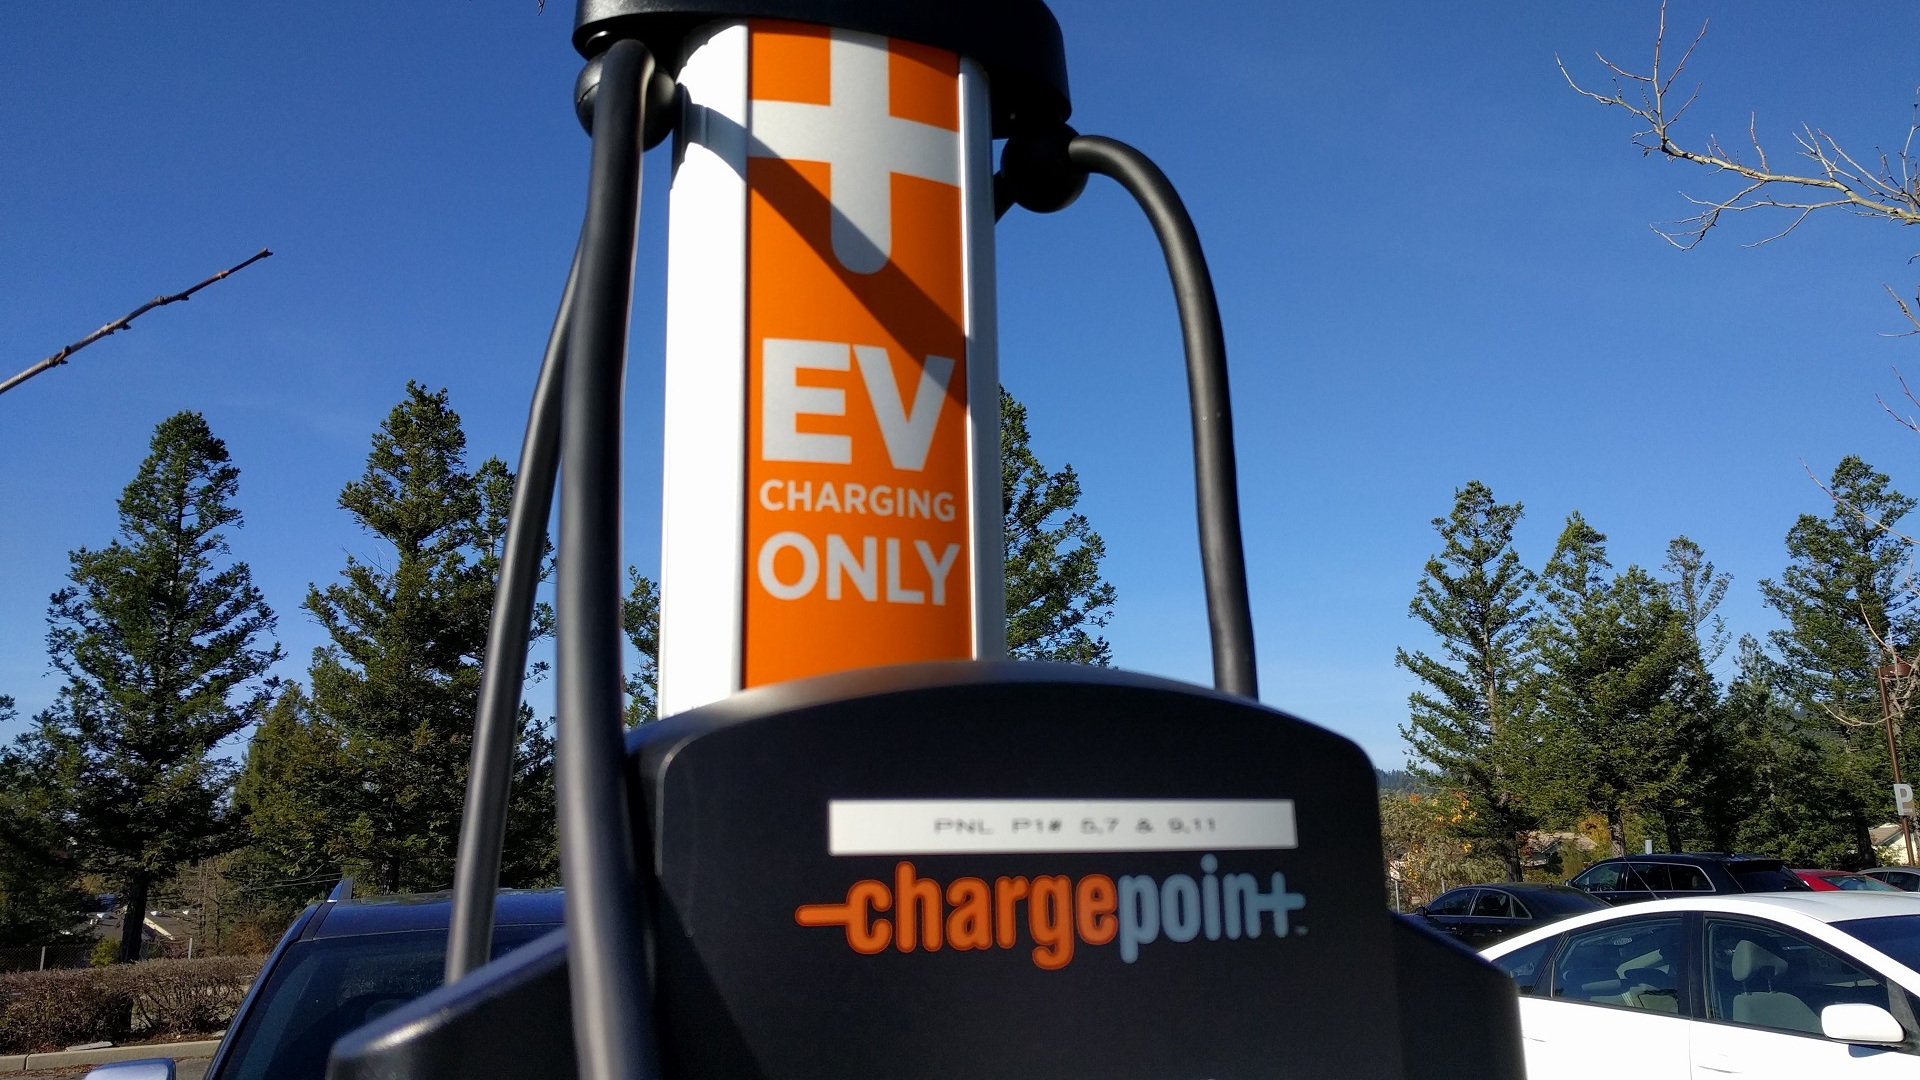 2018 Kia Niro Plug-In Hybrid charging at ChargePoint station, Santa Cruz, California, Dec 2017